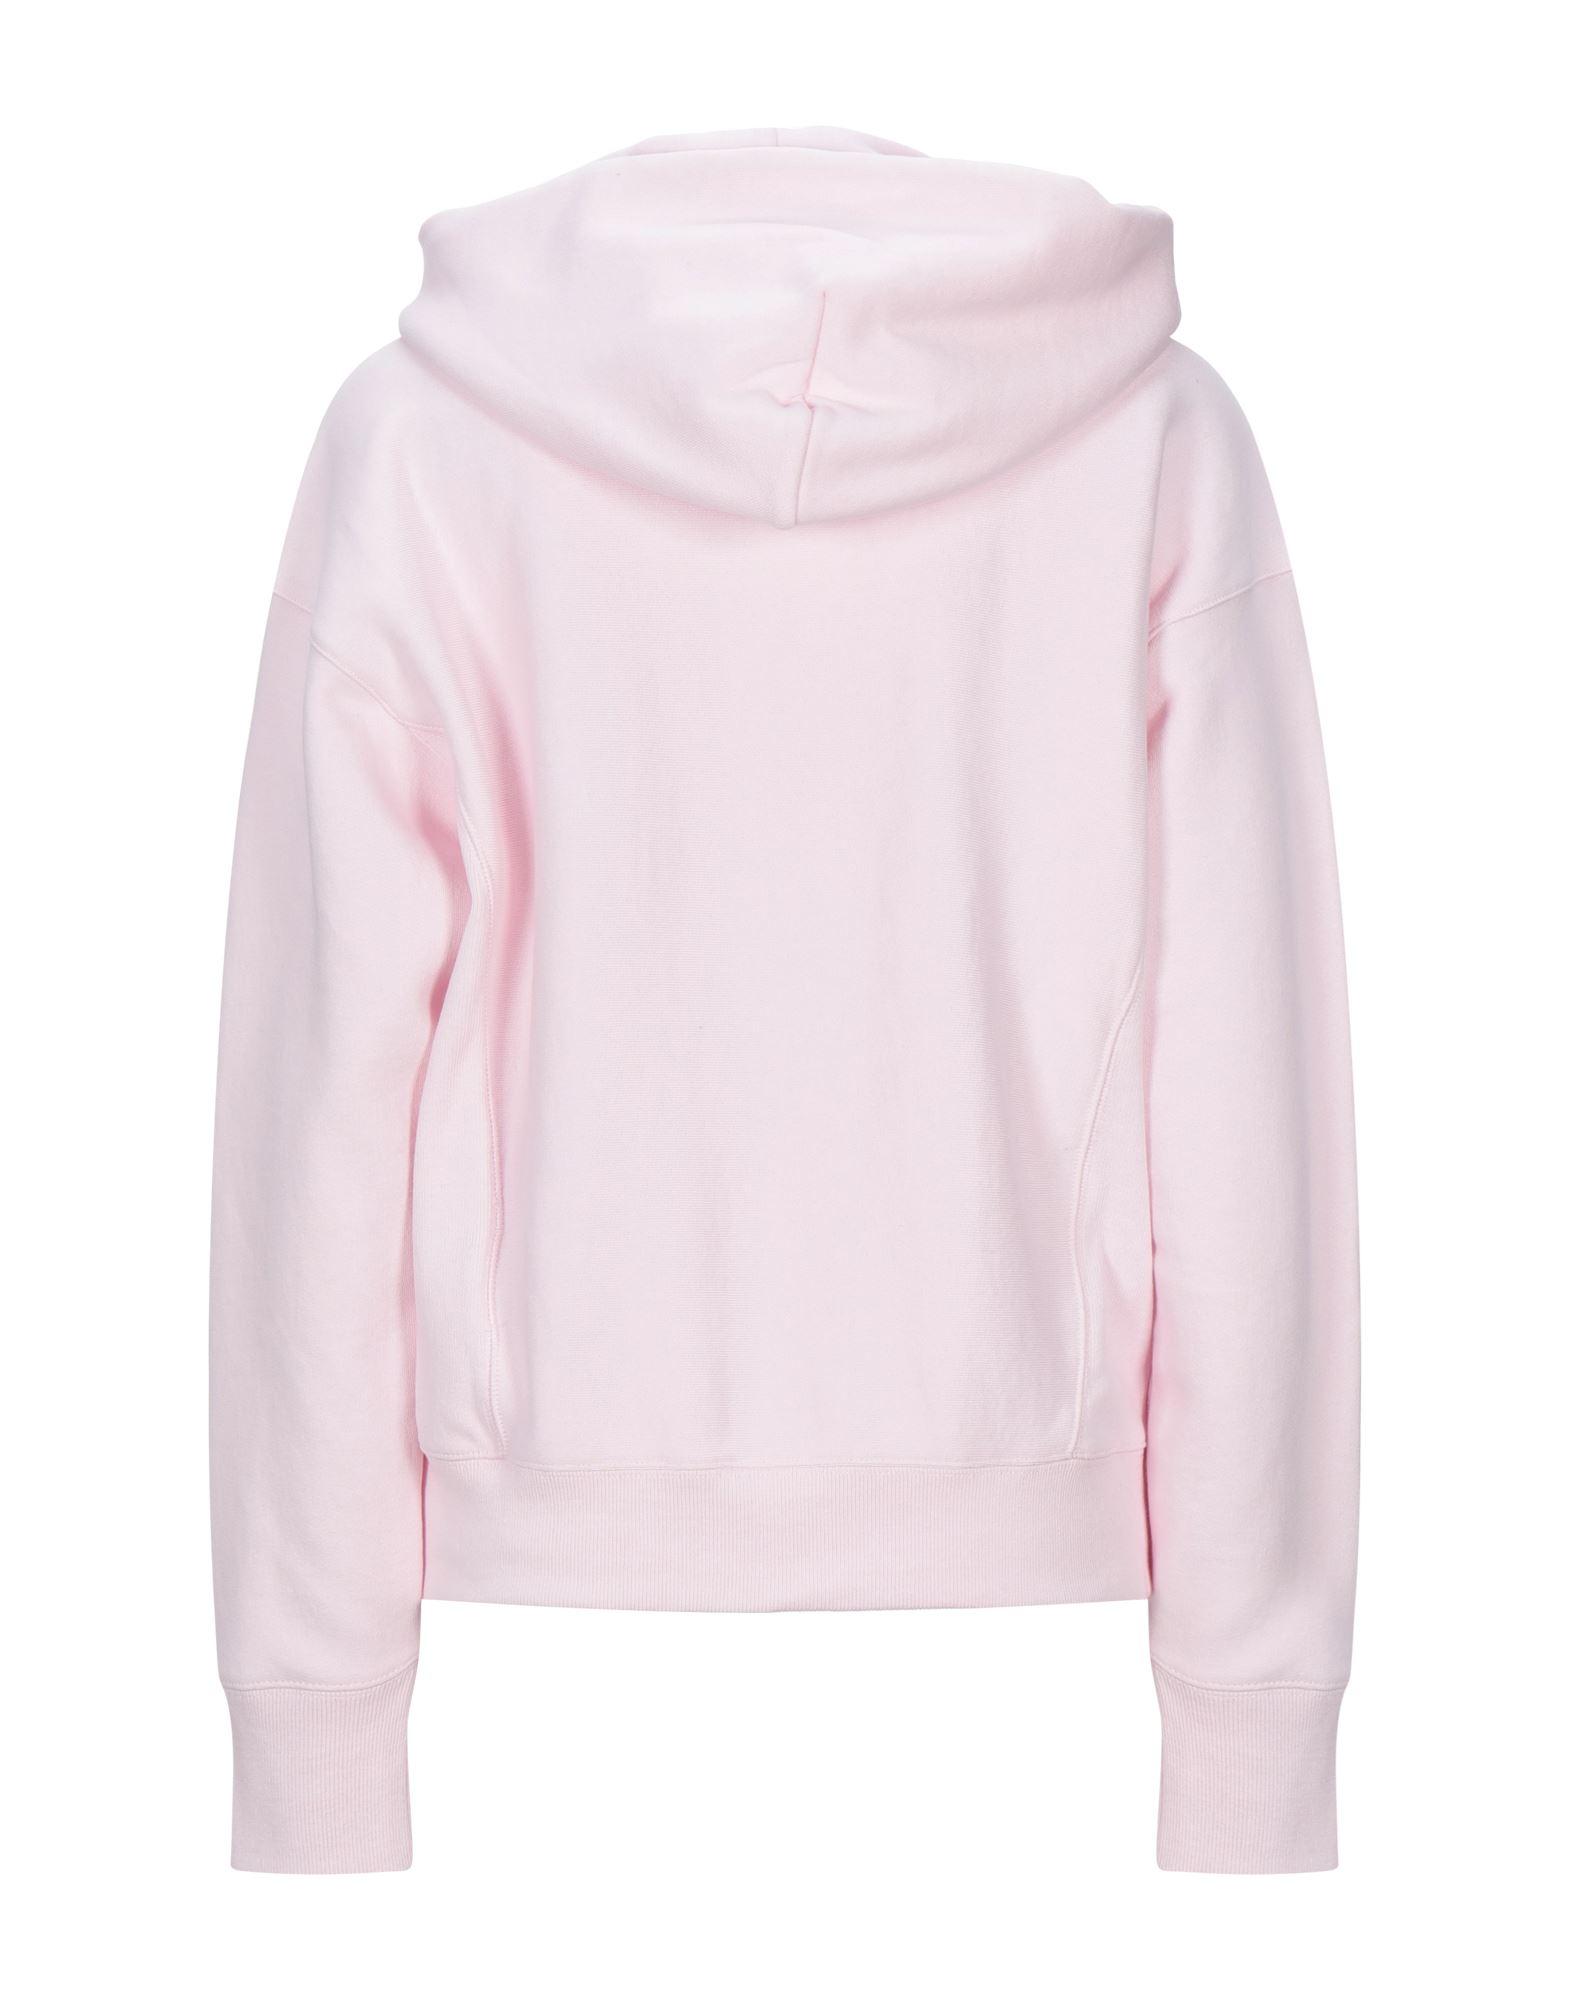 Champion Fleece Sweatshirt in Light Pink (Pink) - Lyst